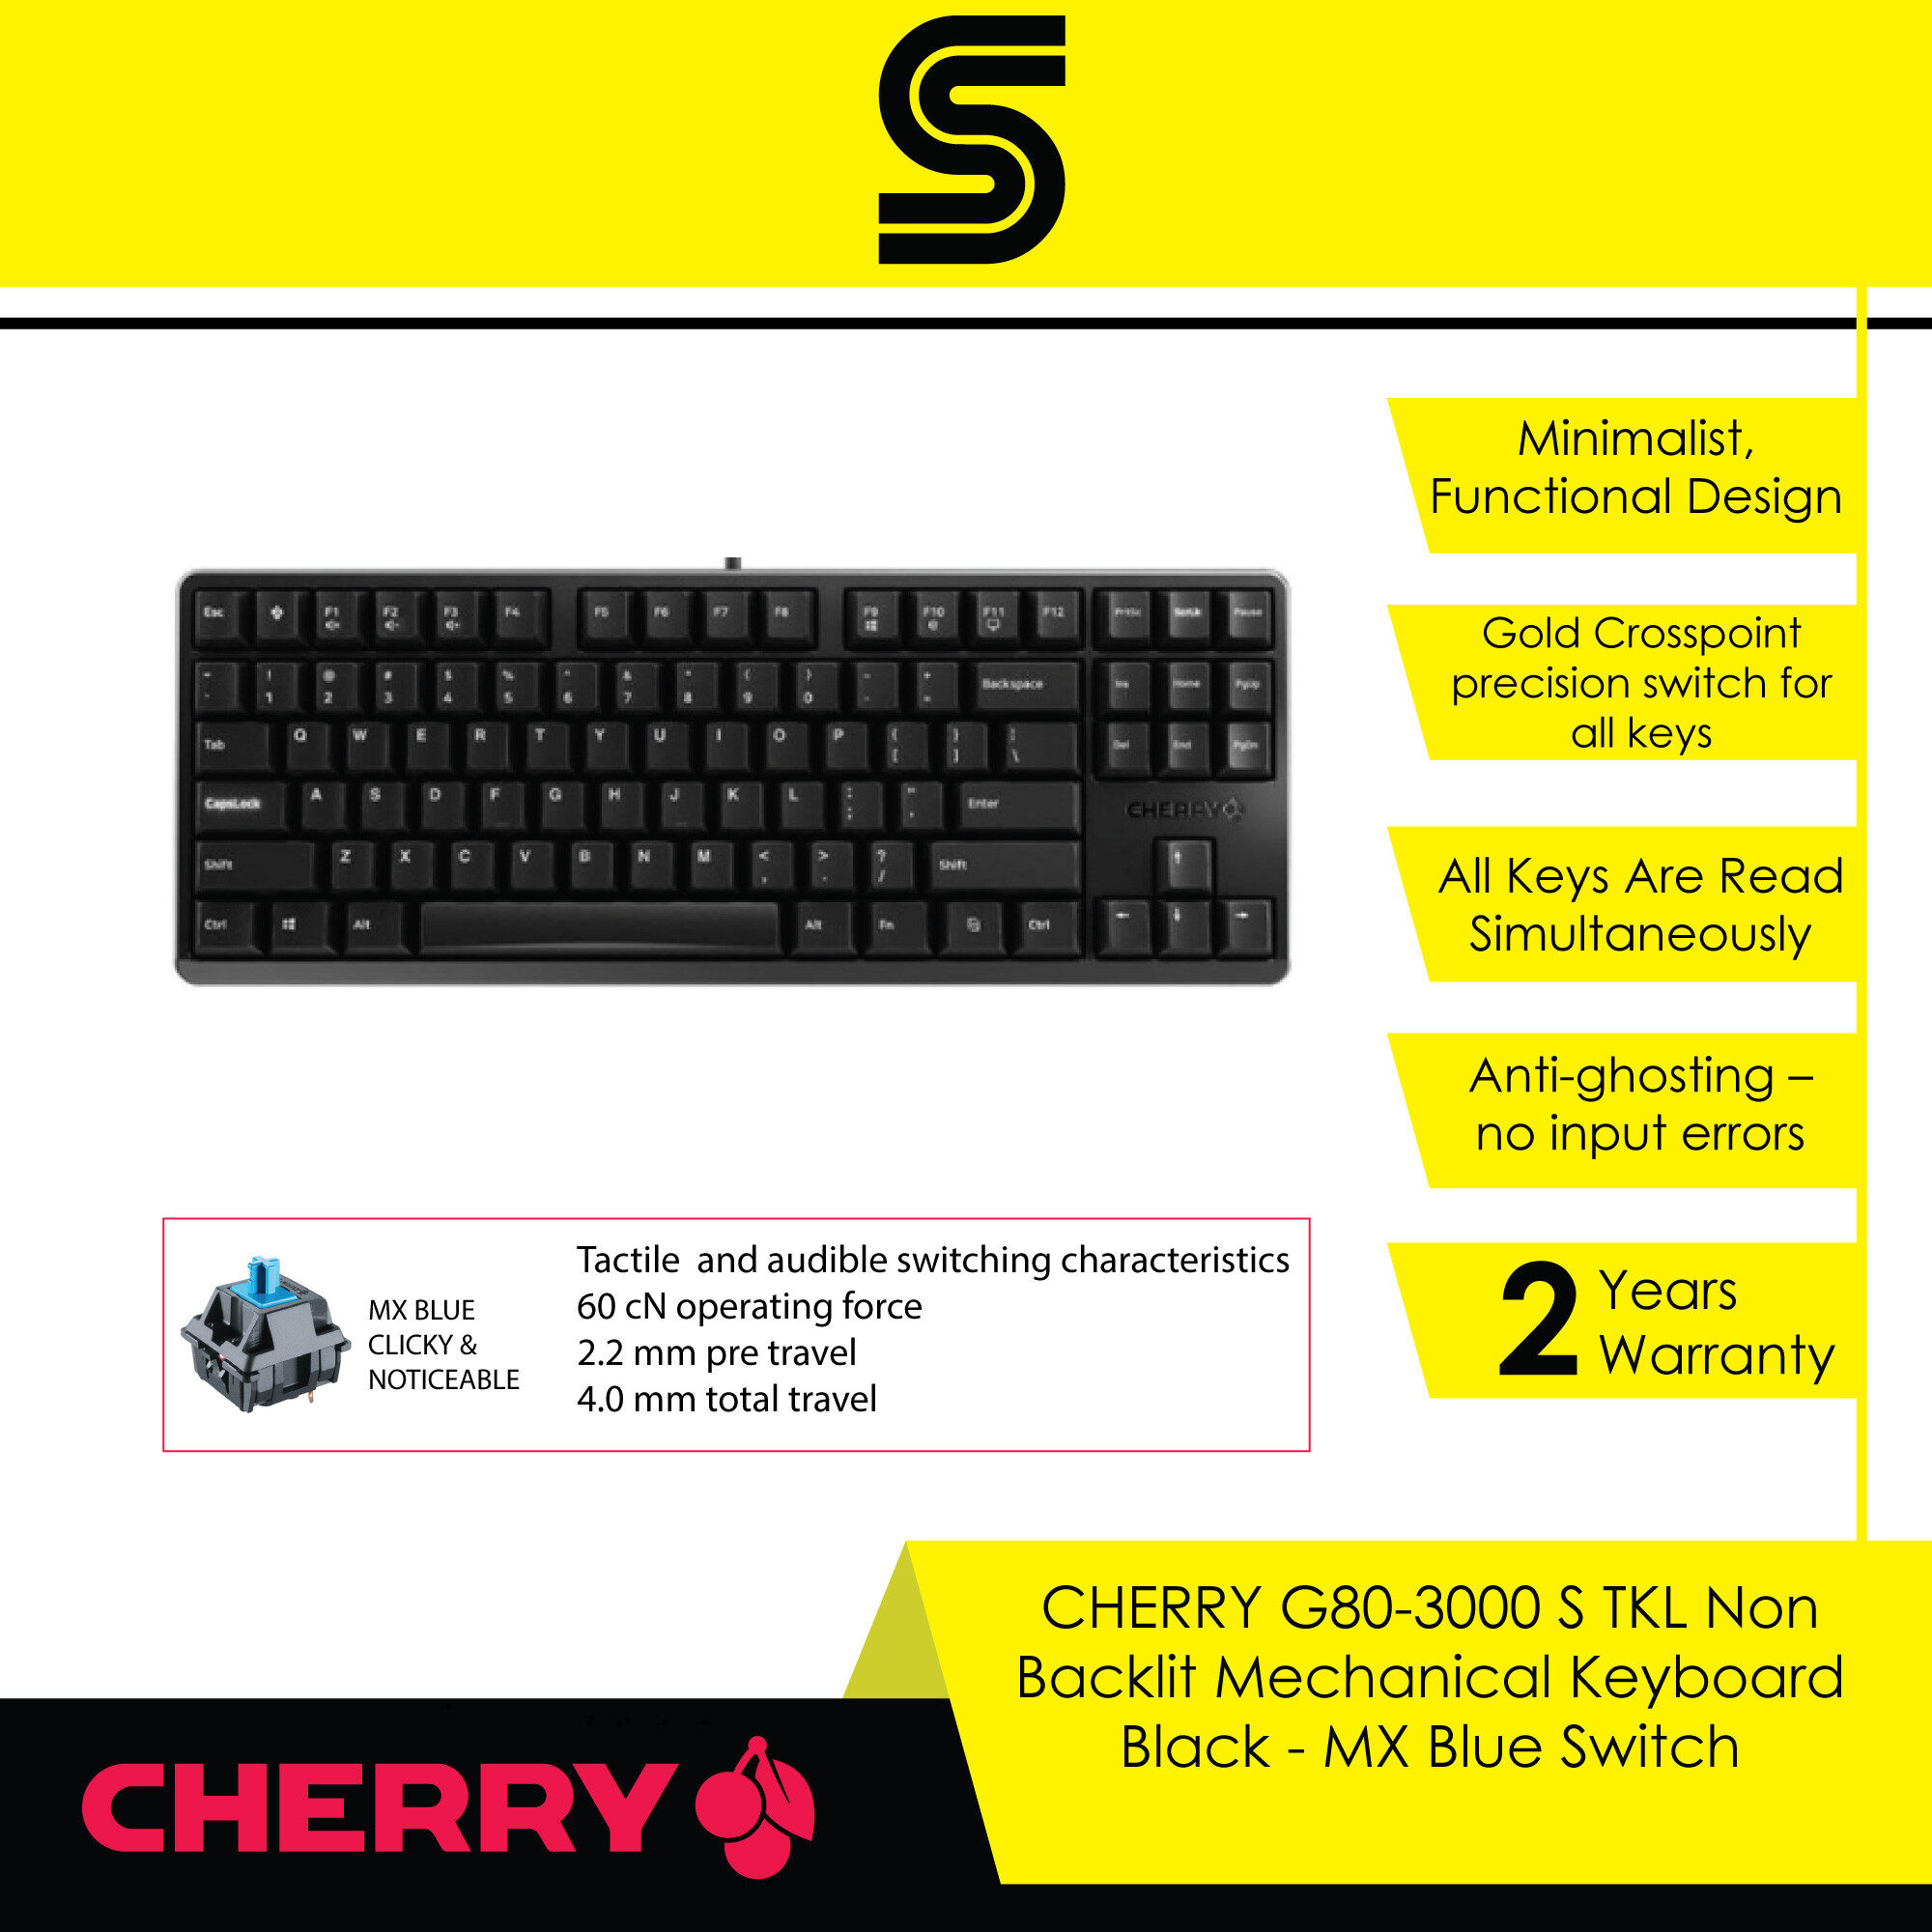 CHERRY G80-3000 S TKL Non Backlit Mechanical Keyboard - Black/White - MX Blue/MX Red/MX Brown/MX Silent Red